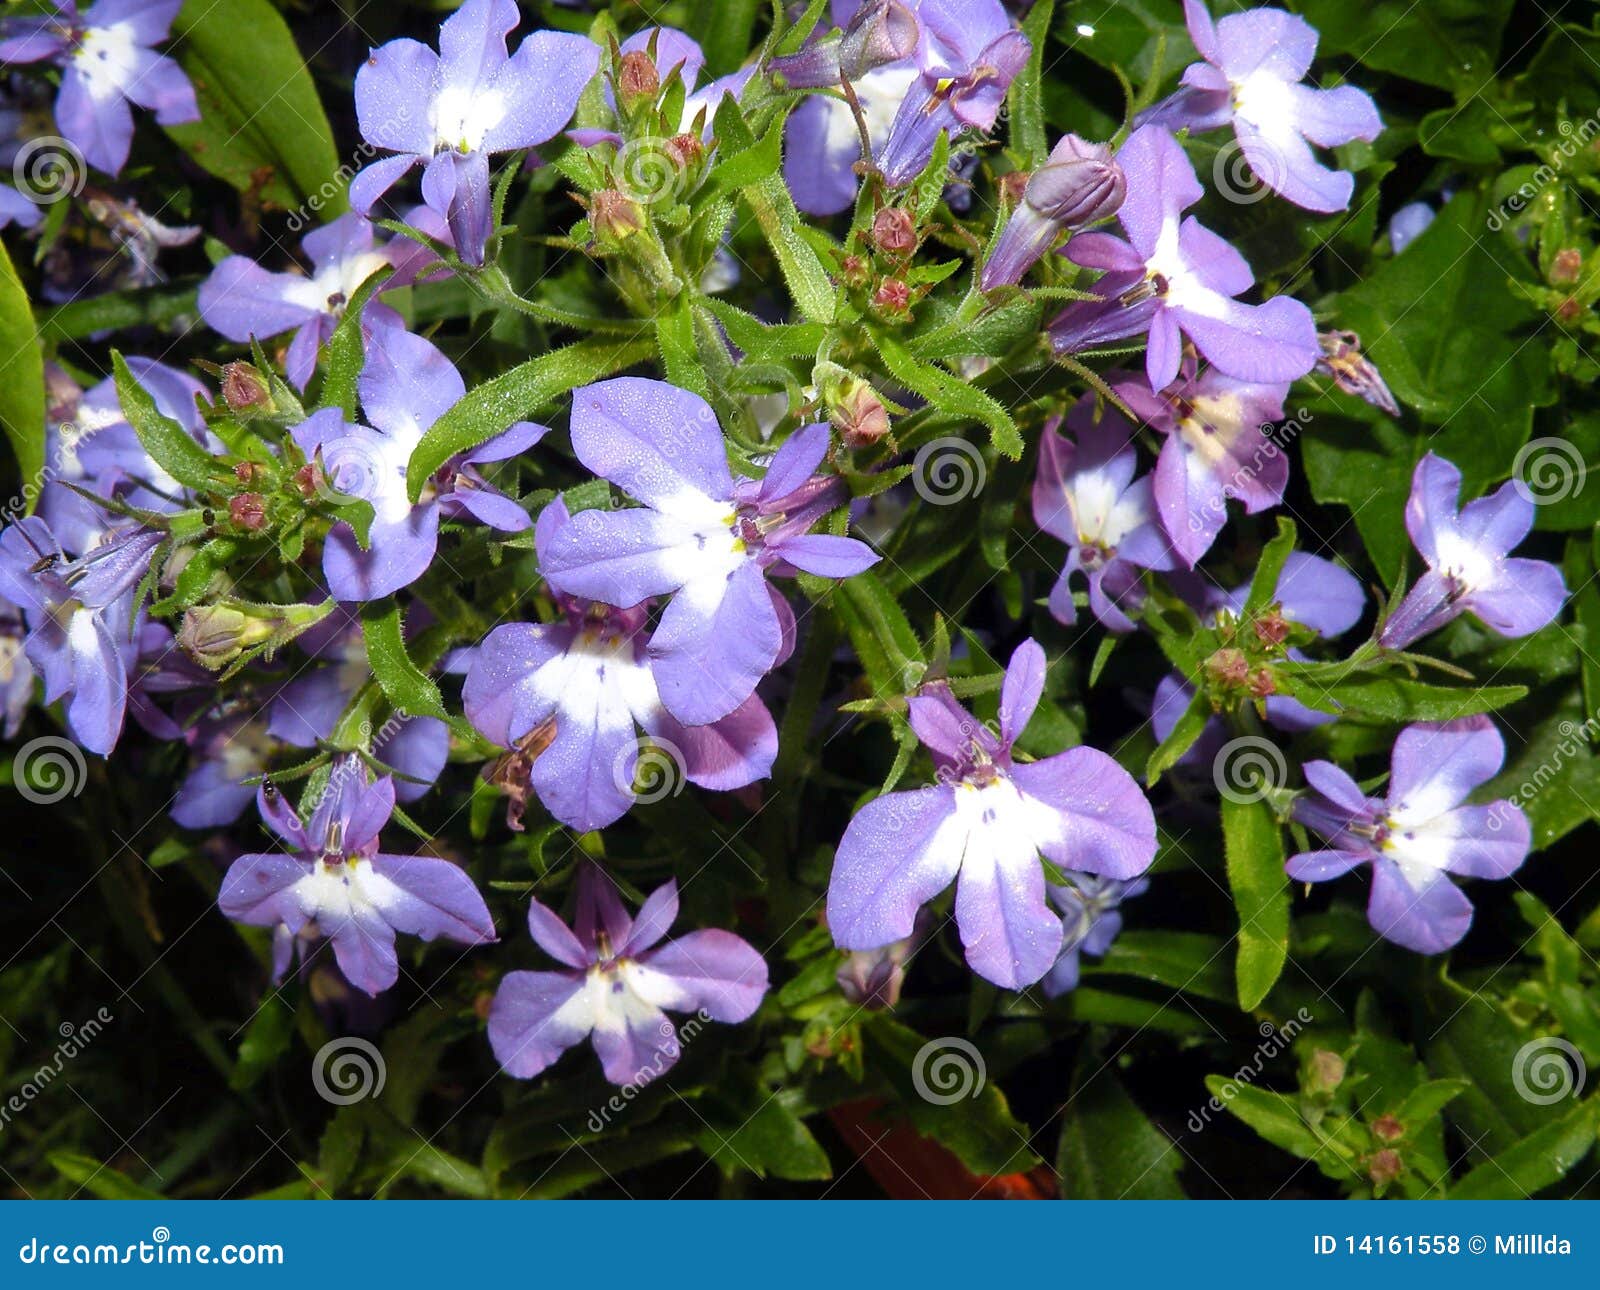 Blue flowers stock photo. Image of macro, plant, white - 14161558